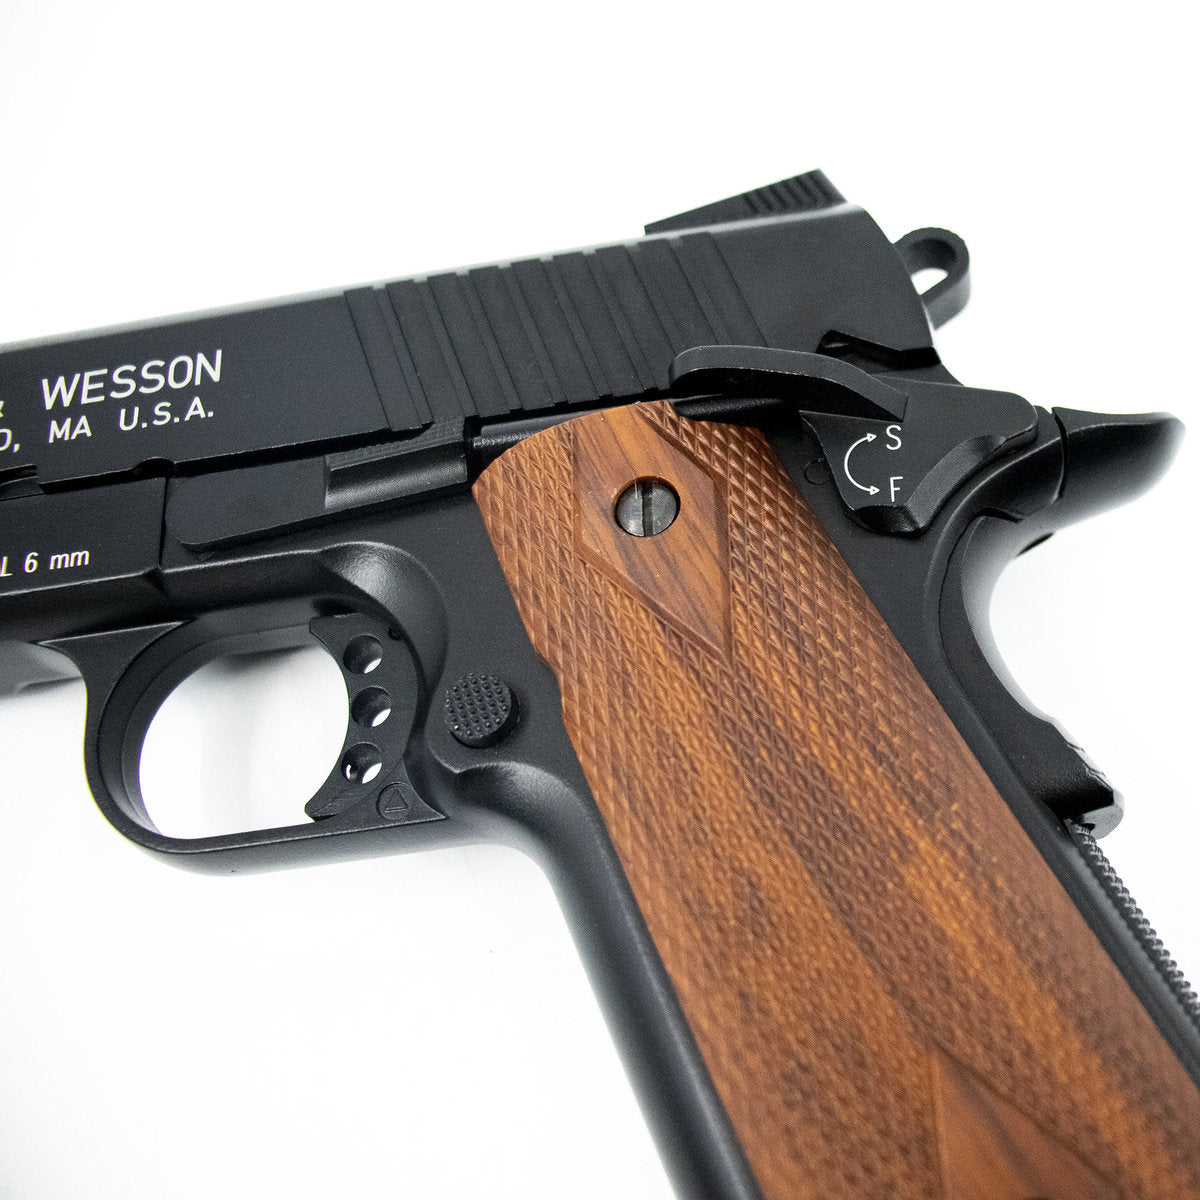 Valken / Smith & Wesson 1911 Tac Gen3 CO2 Blowback Airsoft Pistol - Black/Brown